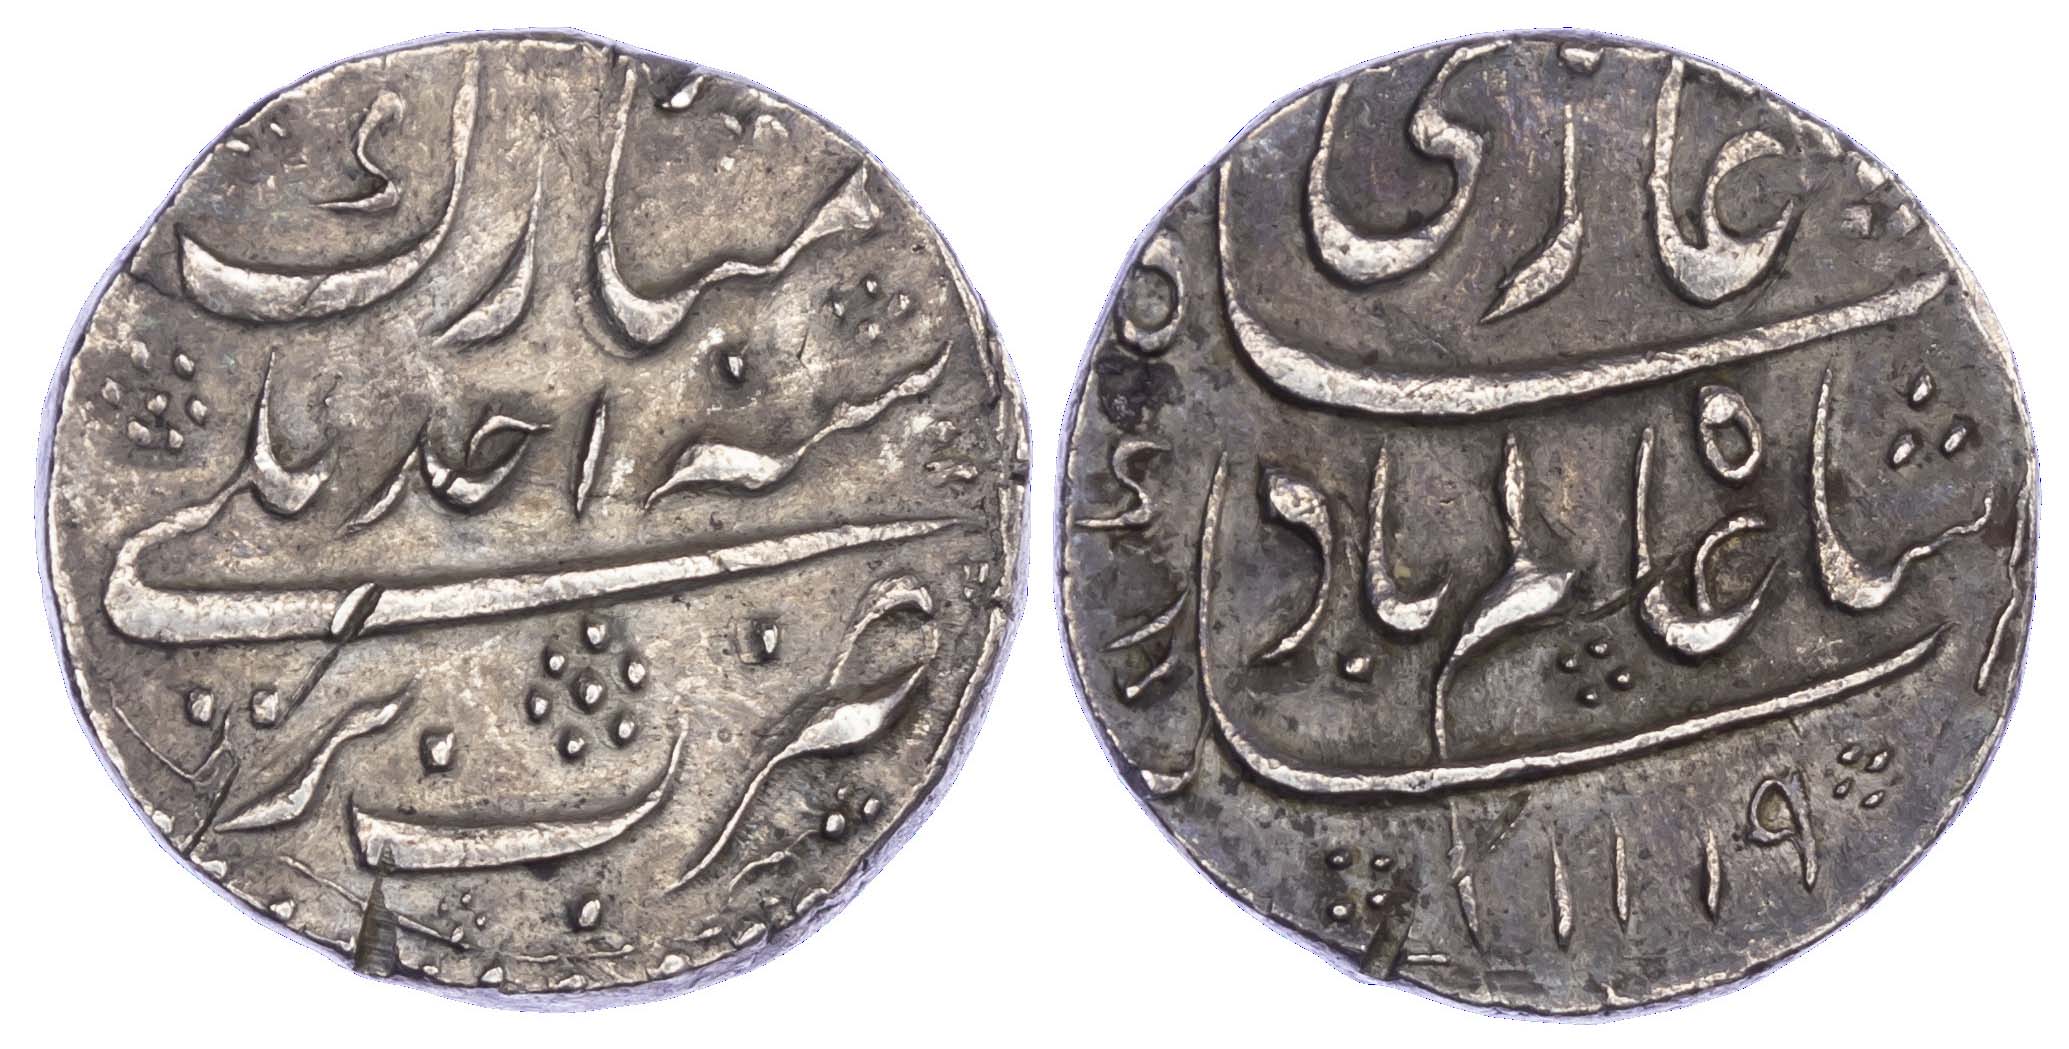 India, Mughal Empire, Shah Alam Bahadur (1707-1712 AD), silver Rupee